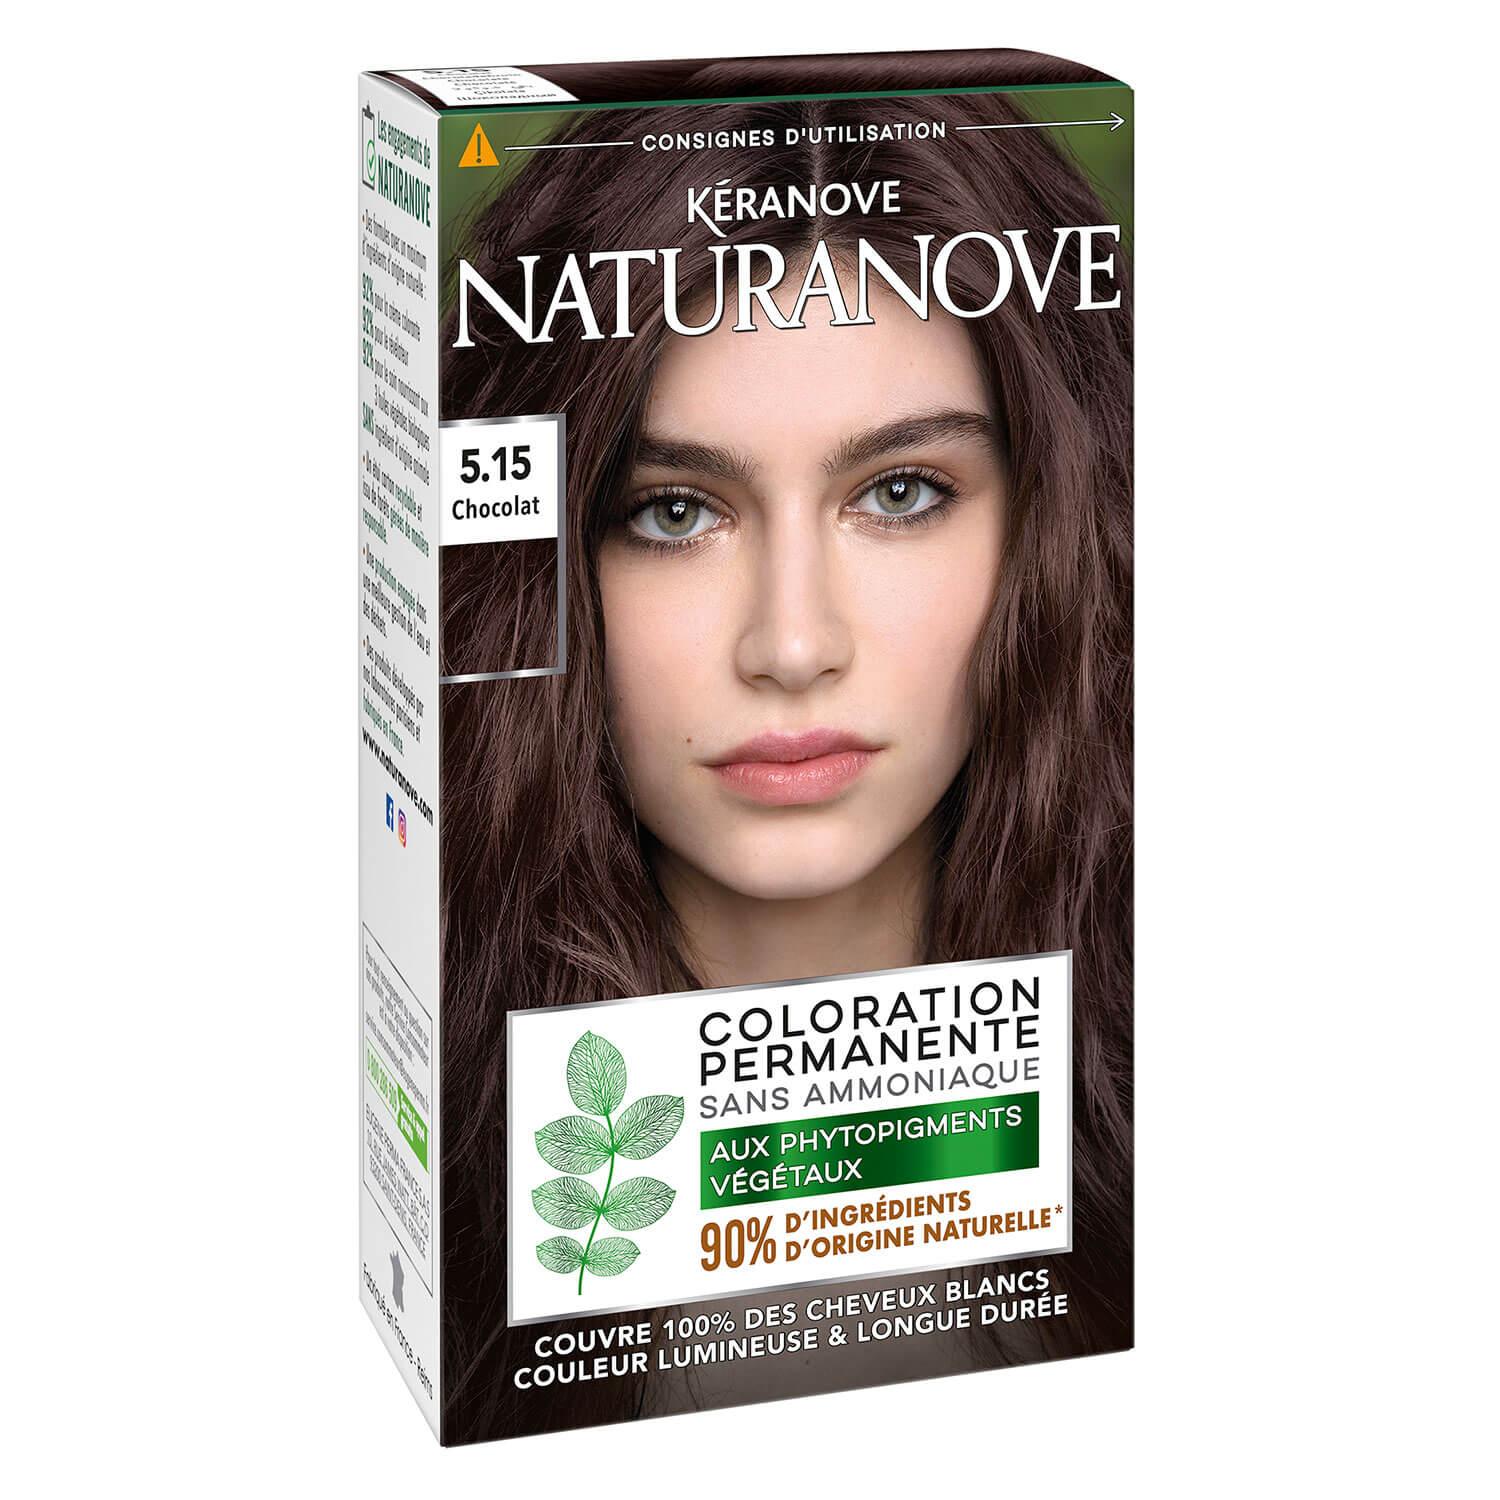 Naturanove - Dauerhafte Haarfarbe Schokolade 5.15